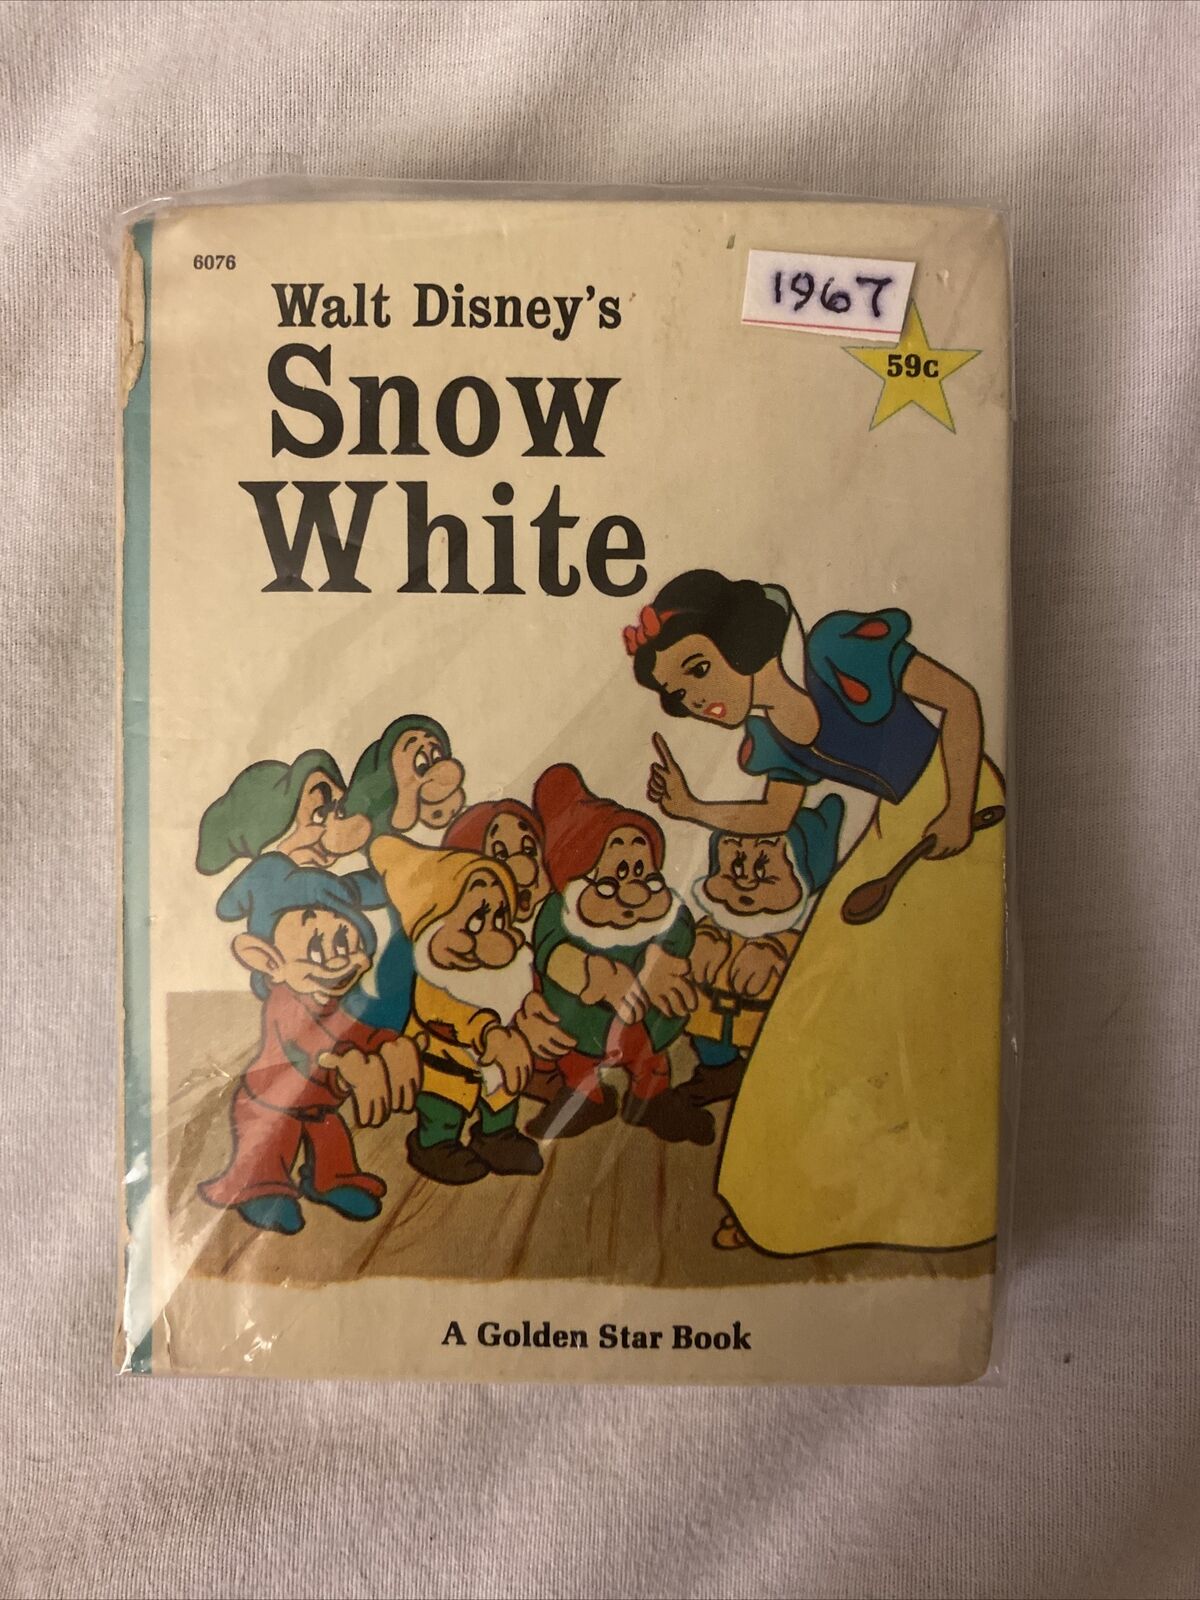 1967 Golden Star Walt Disney Snow White Mini Book Hardcover